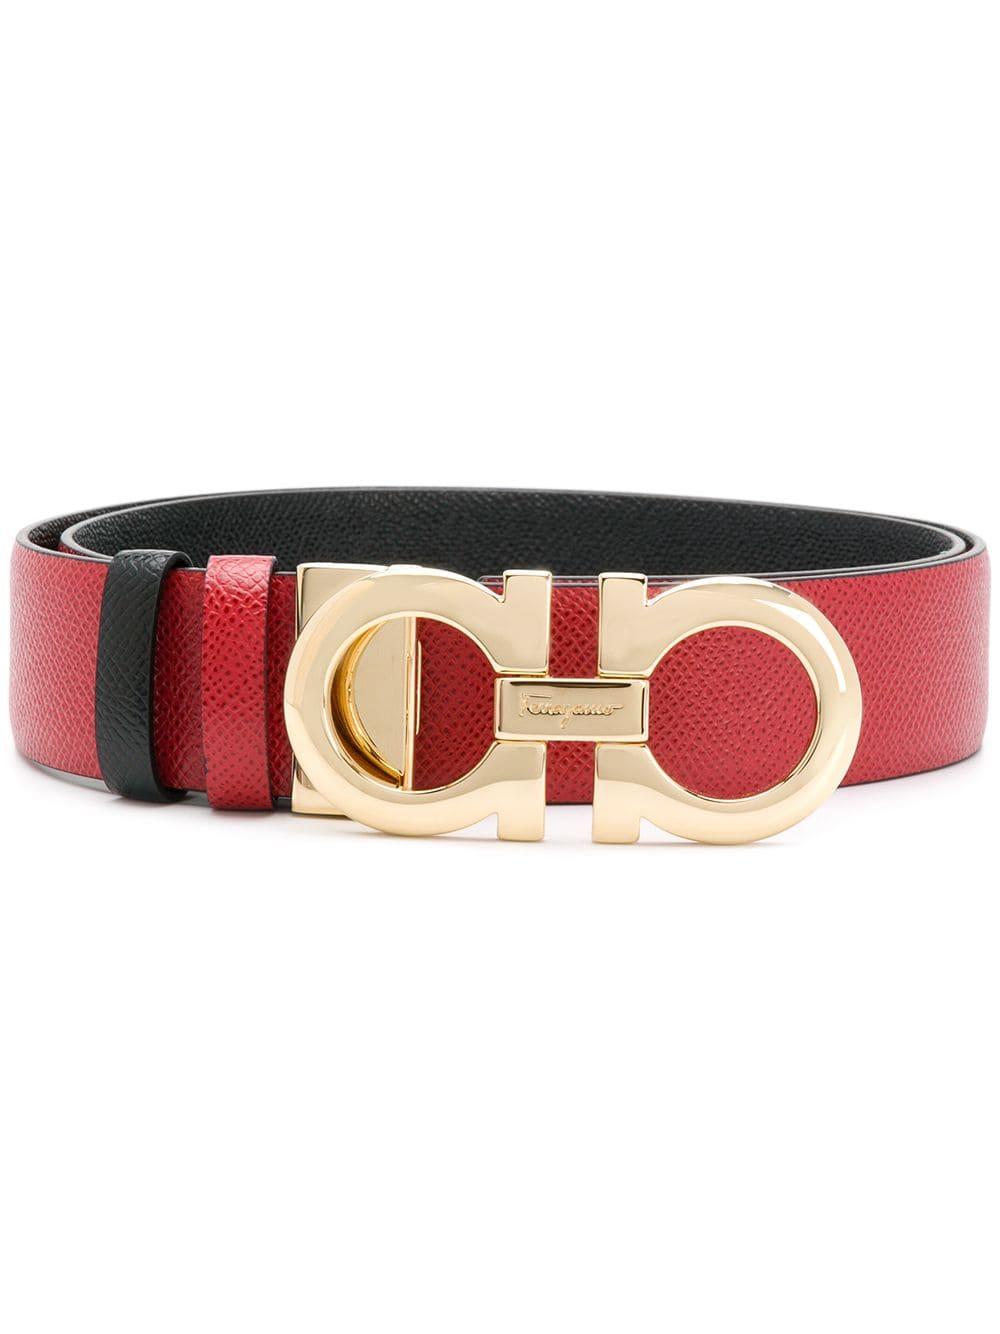 Ferragamo Leather Belt in Red - Lyst